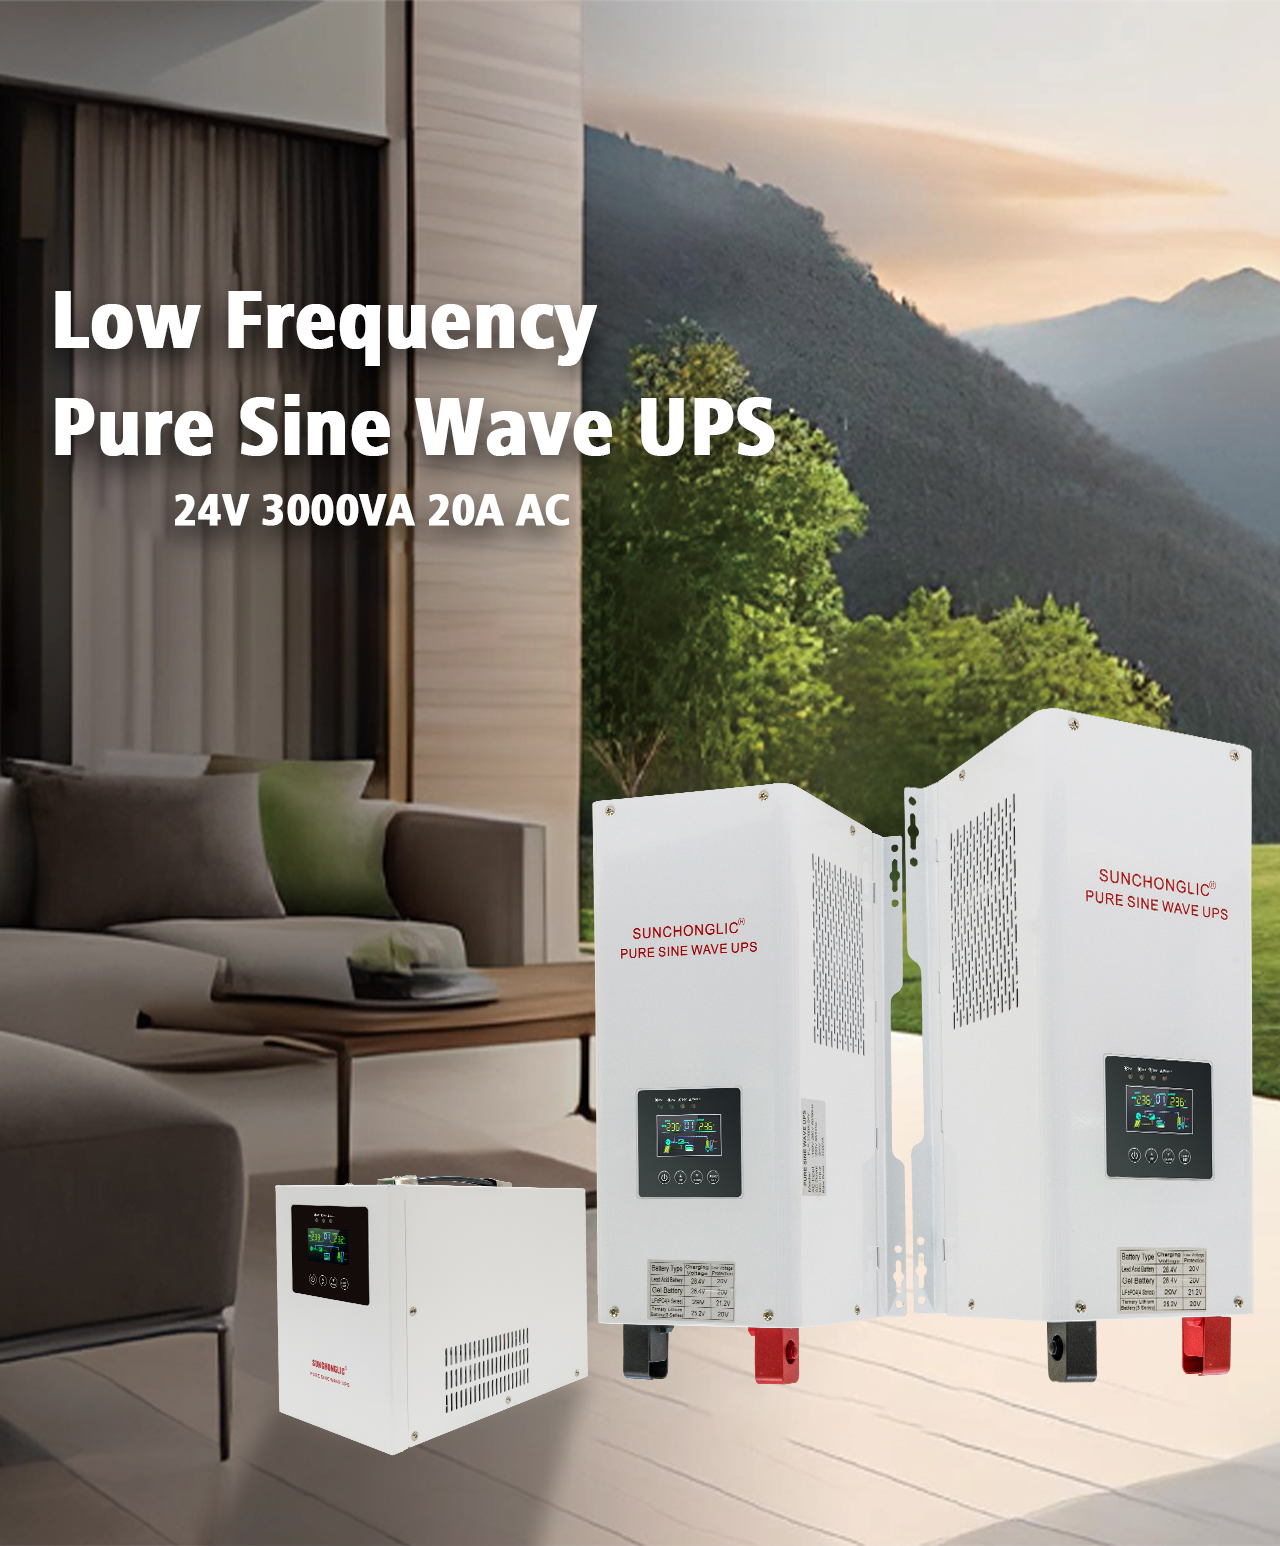 Pure sine wave UPS